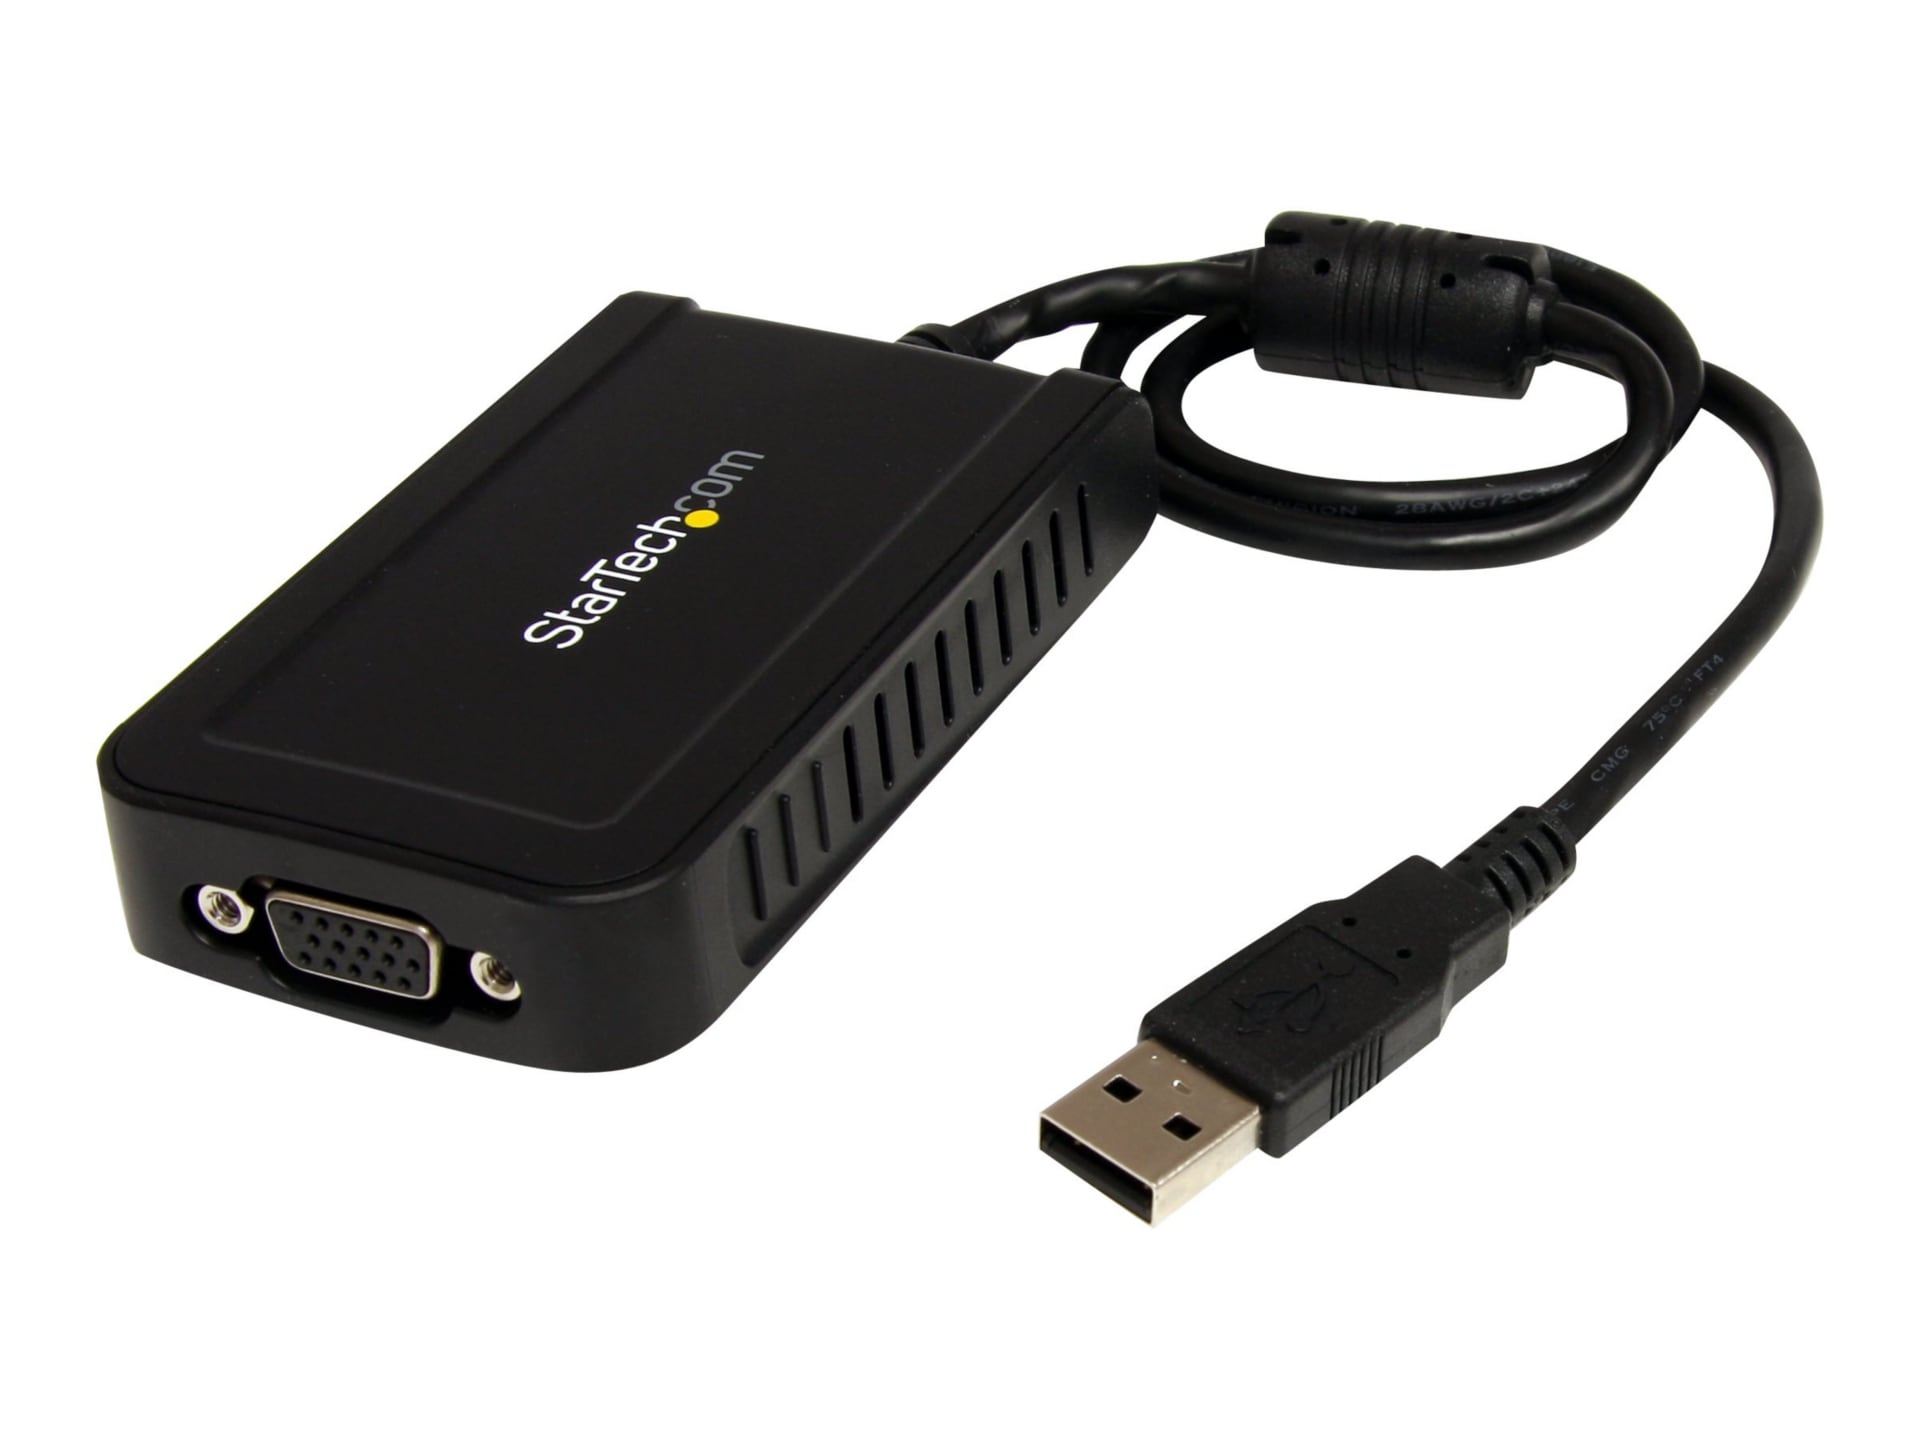 StarTech.com USB VGA Adapter Multi Monitor External Graphics Video Card USB2VGAE3 - Monitor Cables & Adapters CDW.com